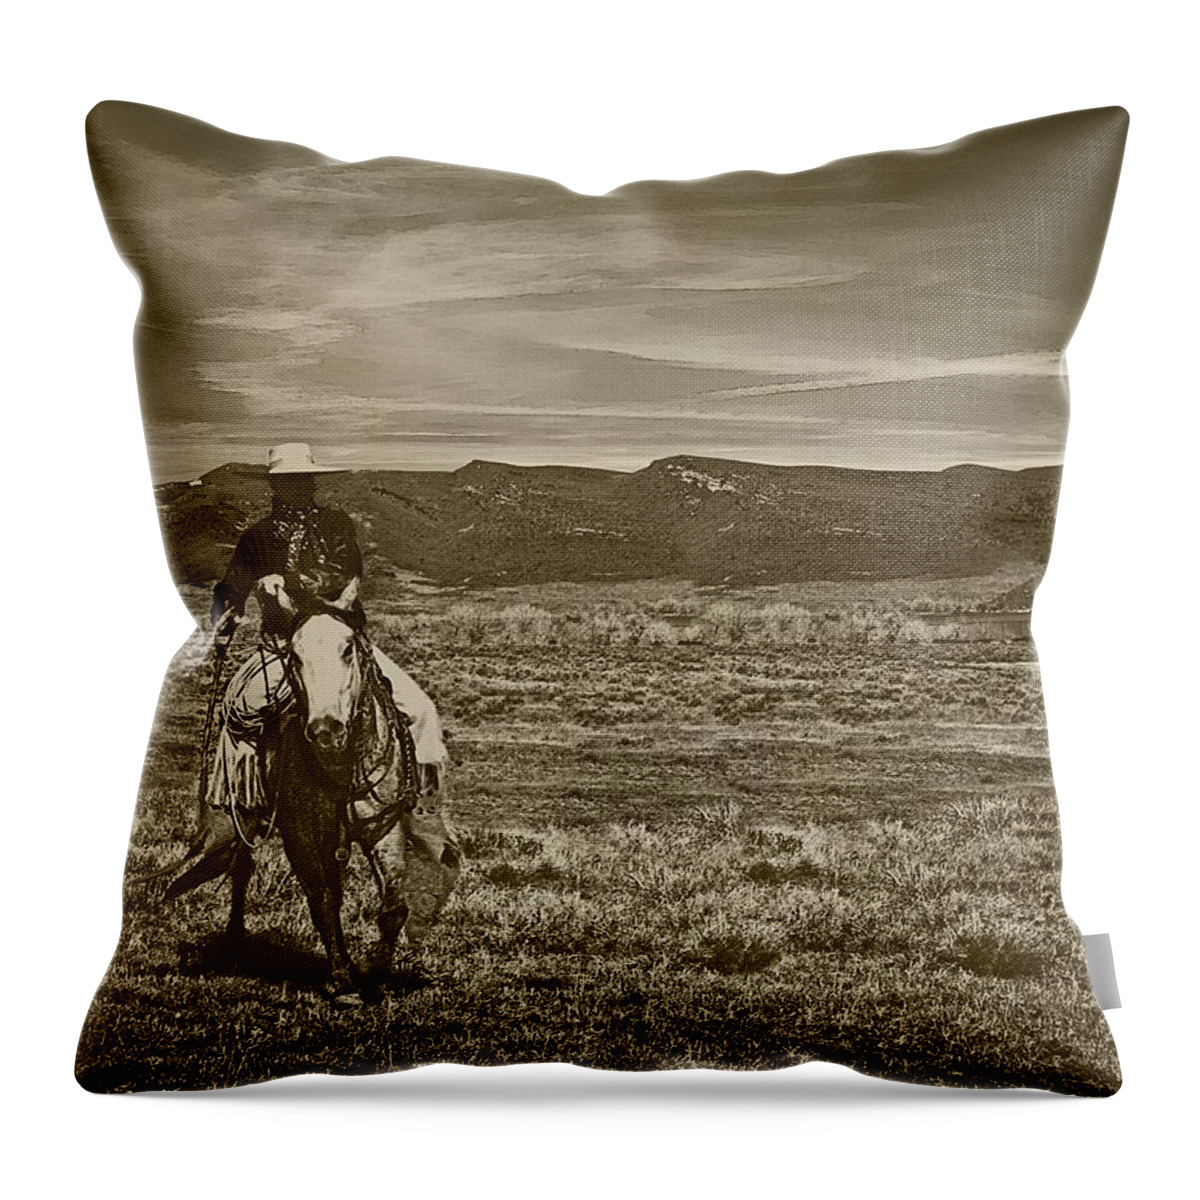 Sepia Throw Pillow featuring the photograph Cowboy Ride by Amanda Smith